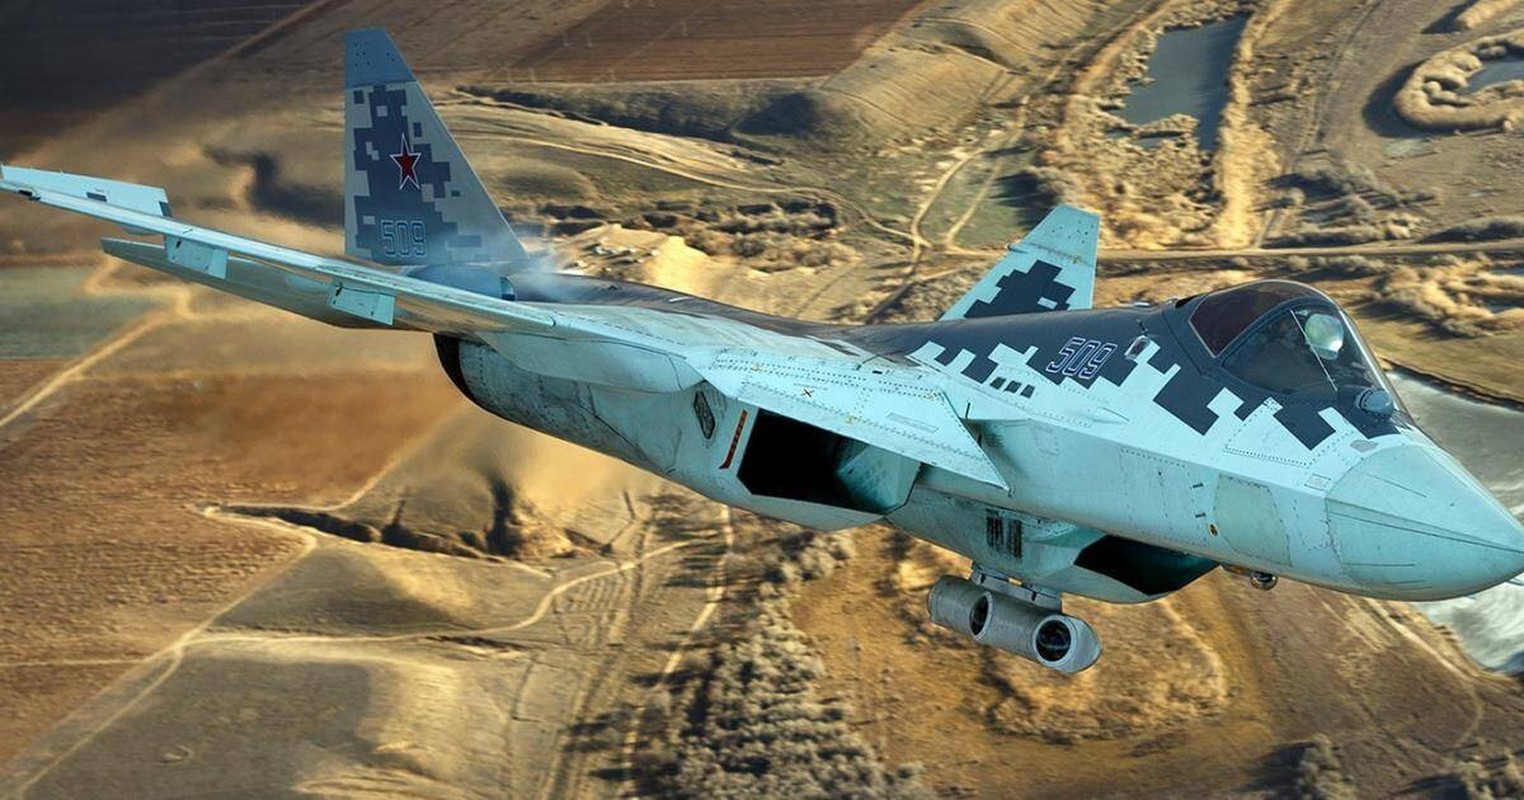 Dieu gi khien tiem kich Su-57 nhinh hon F-22 va vuot xa J-20?-Hinh-12